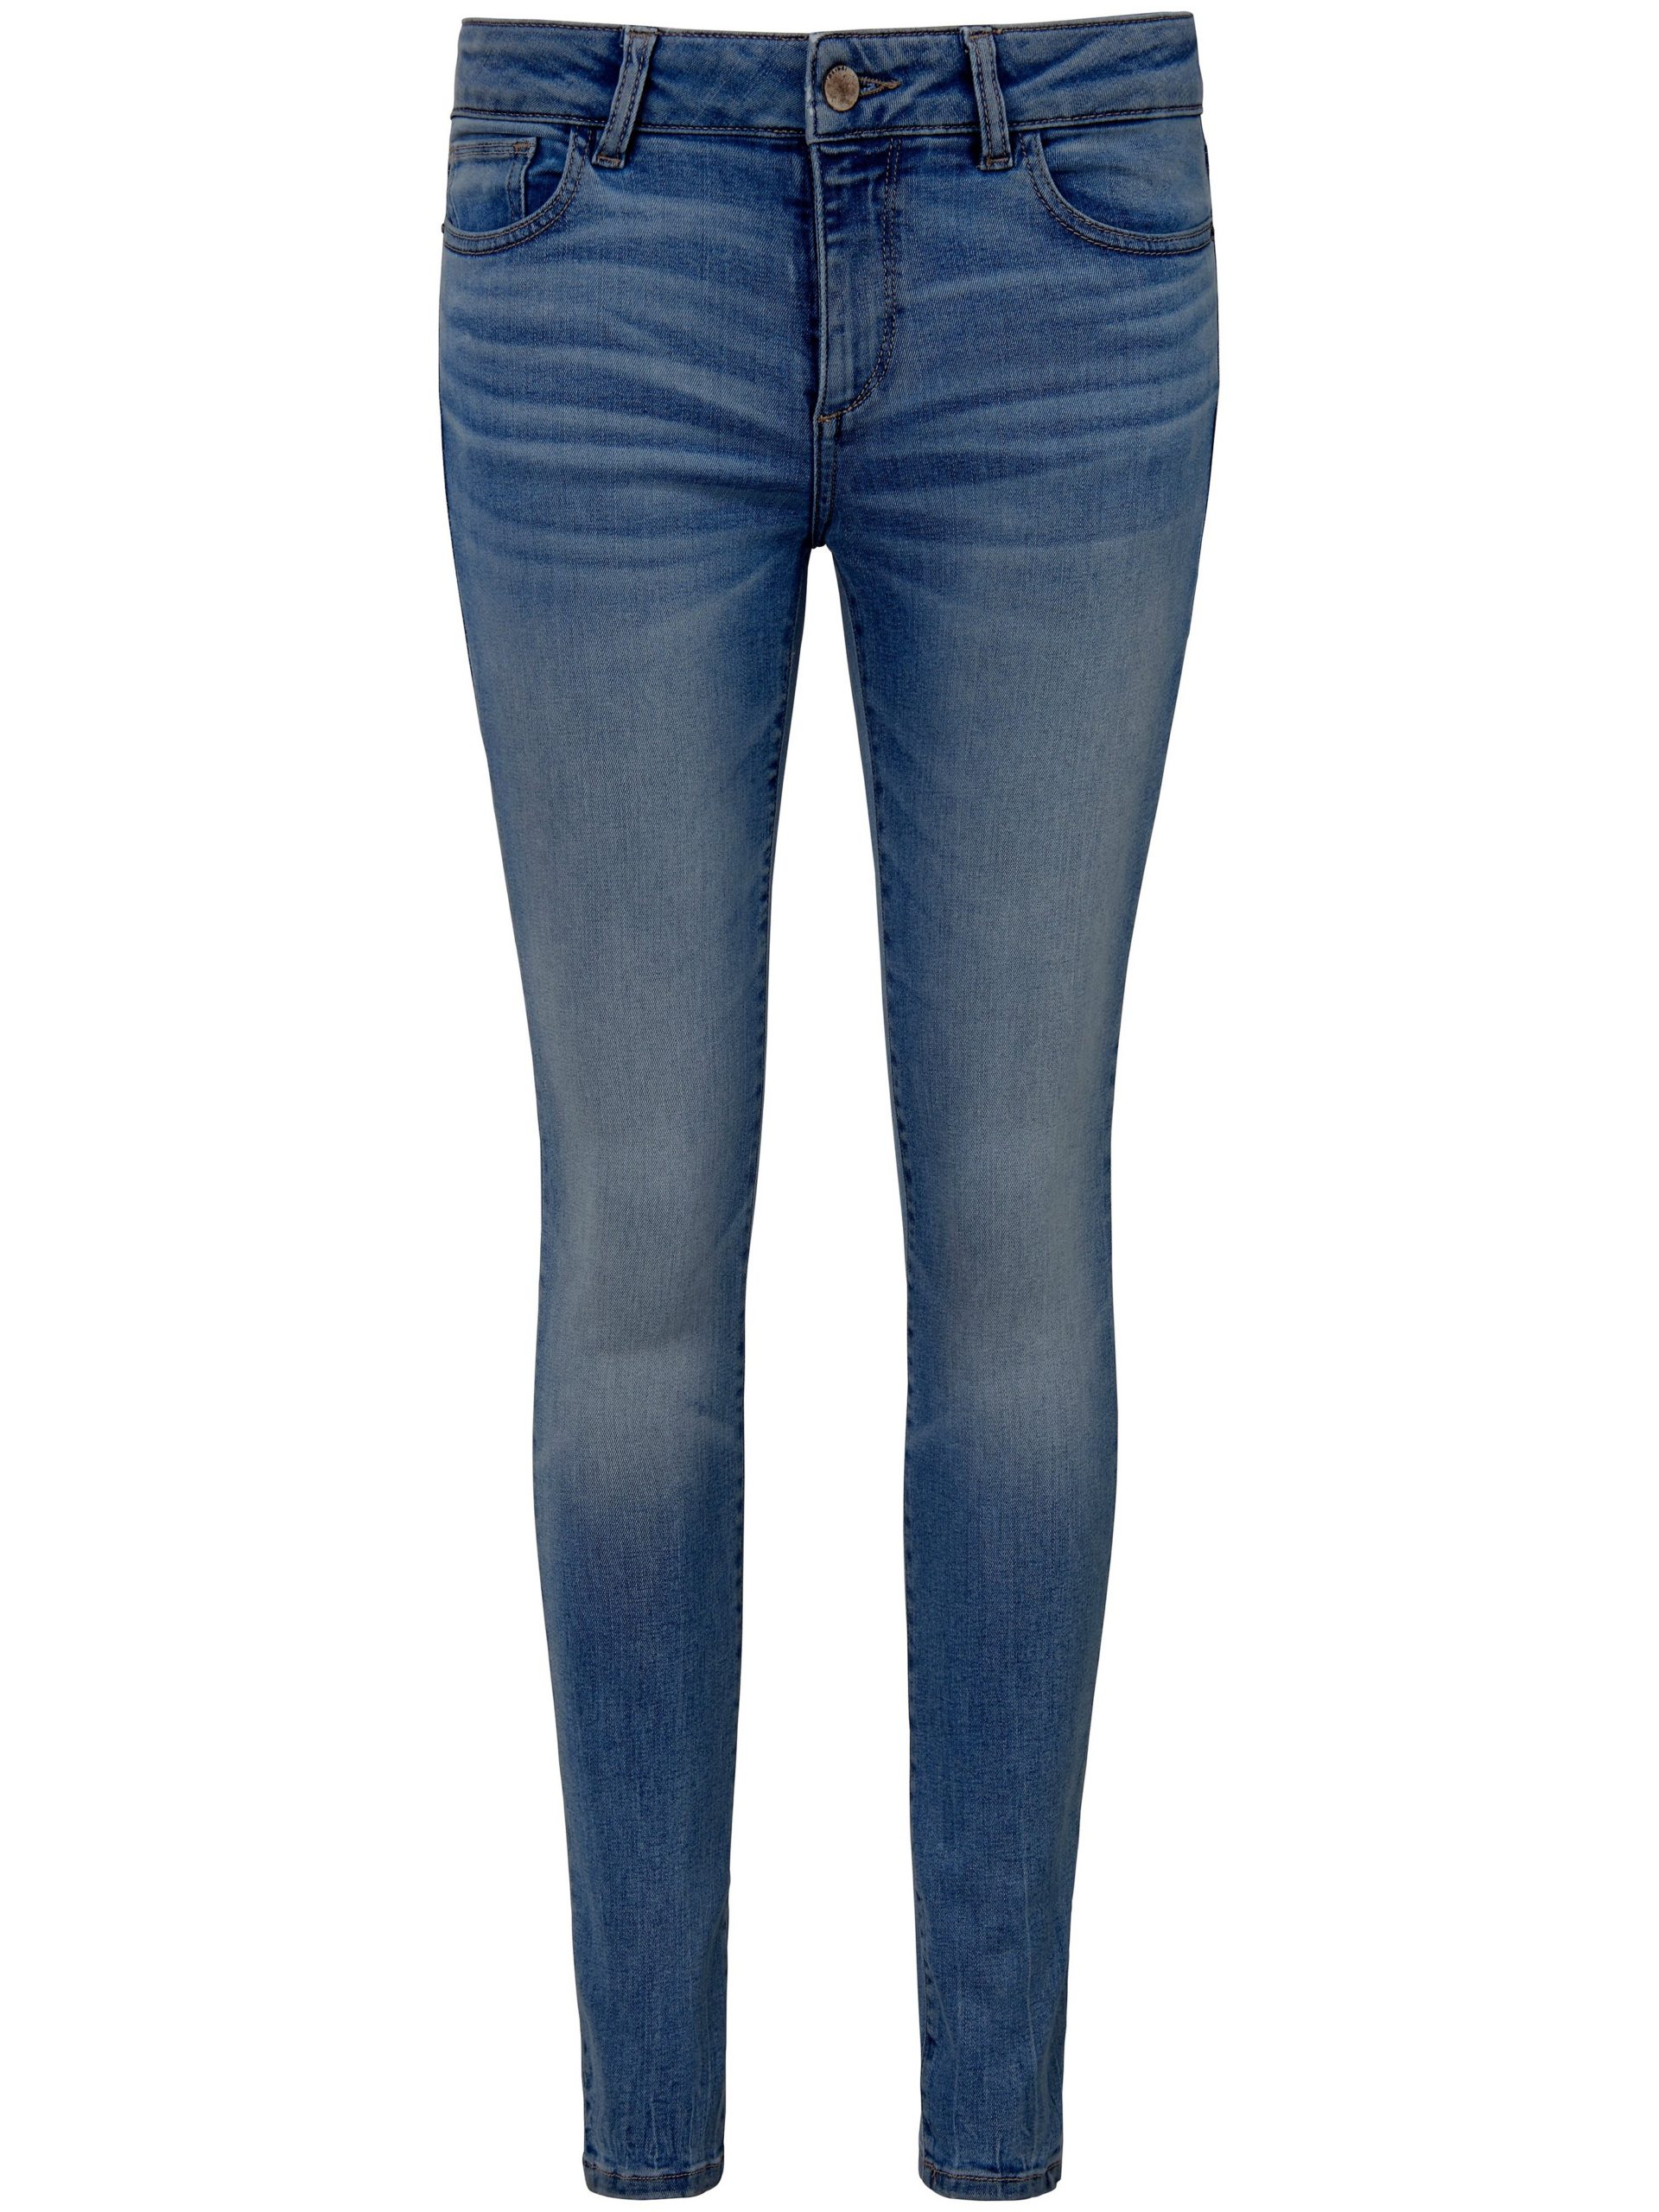 Enkellange jeans model Florence Van DL1961 denim Kopen